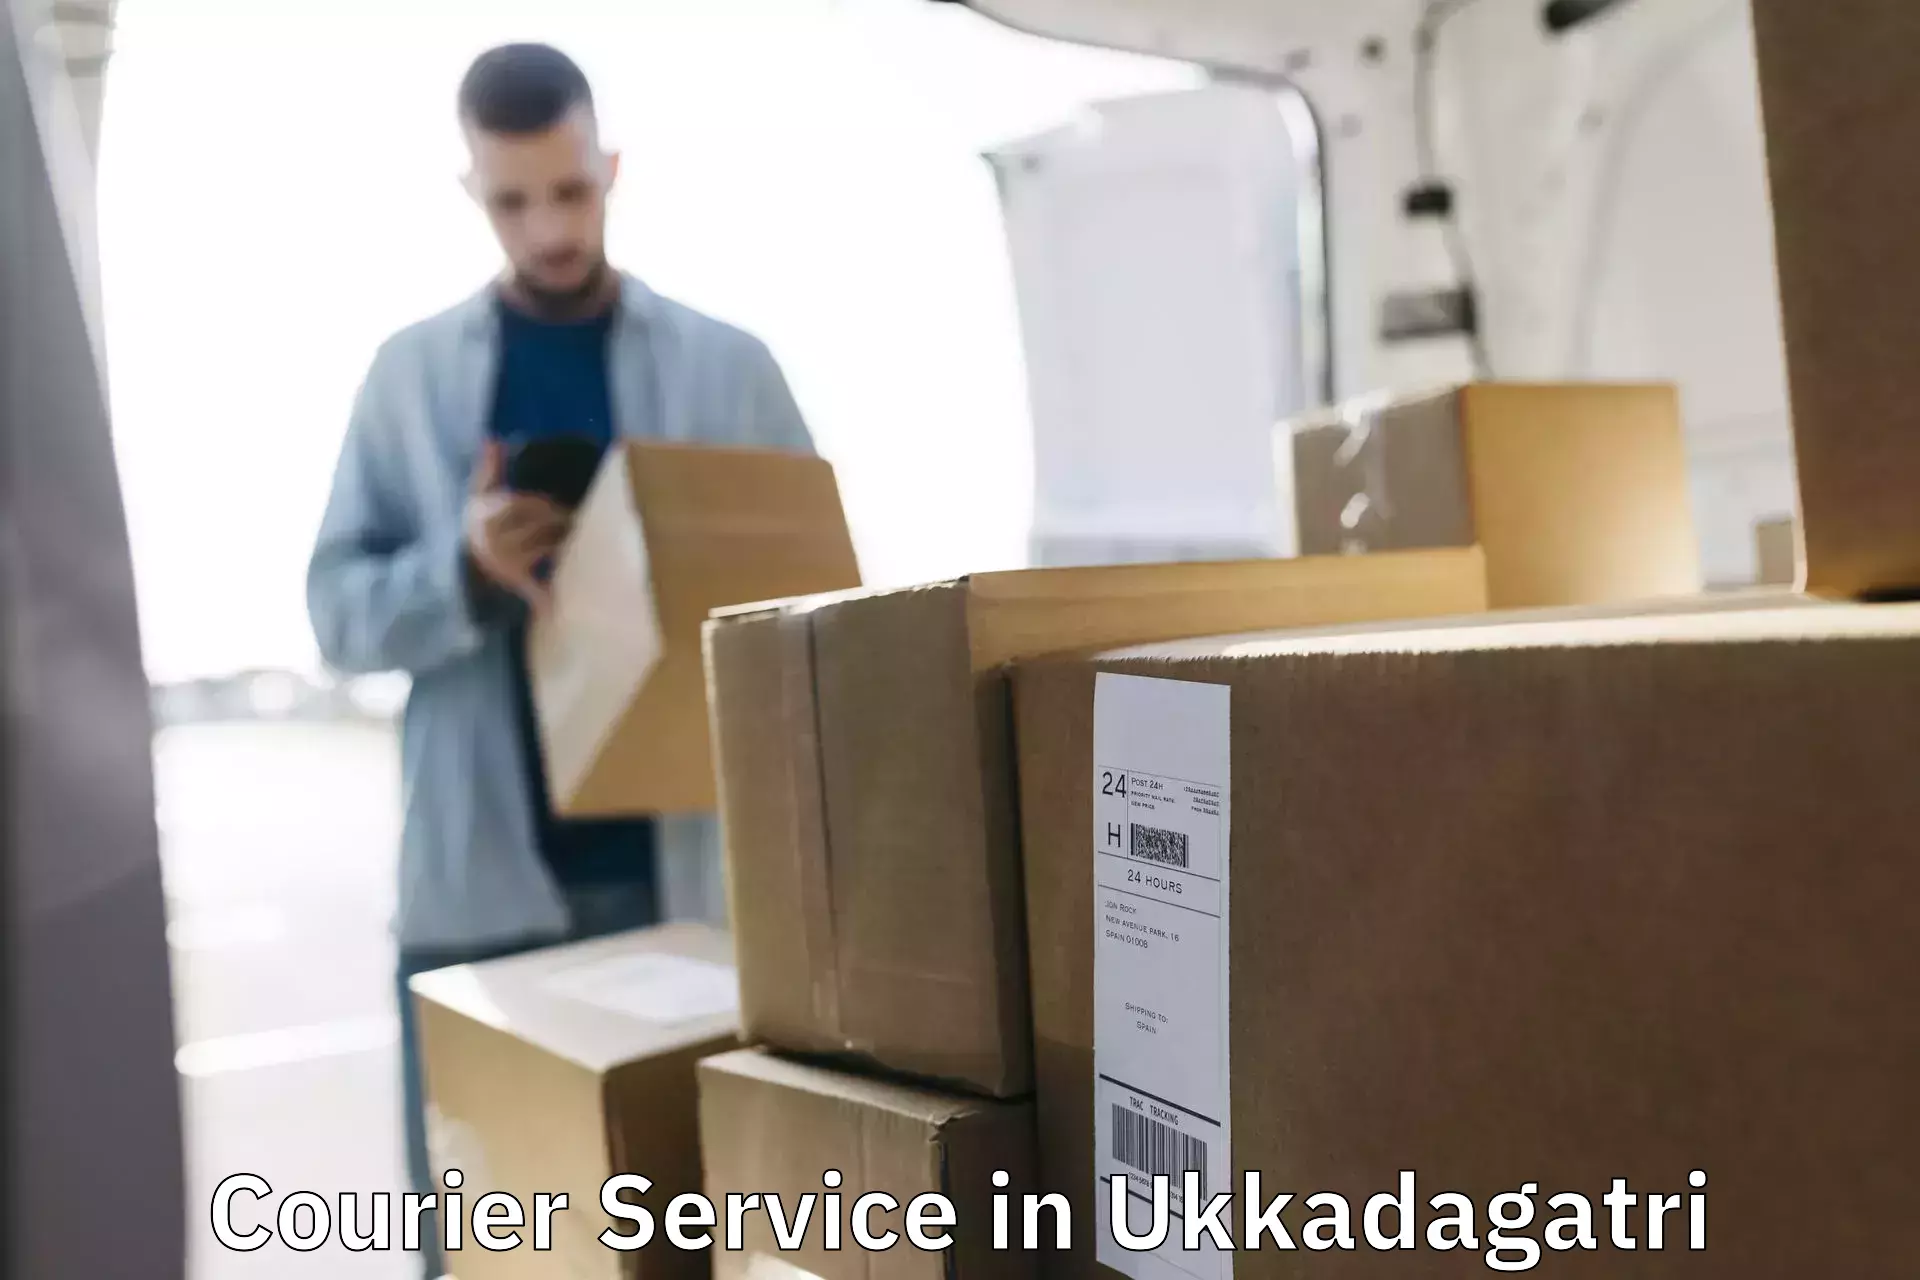 Efficient package consolidation in Ukkadagatri